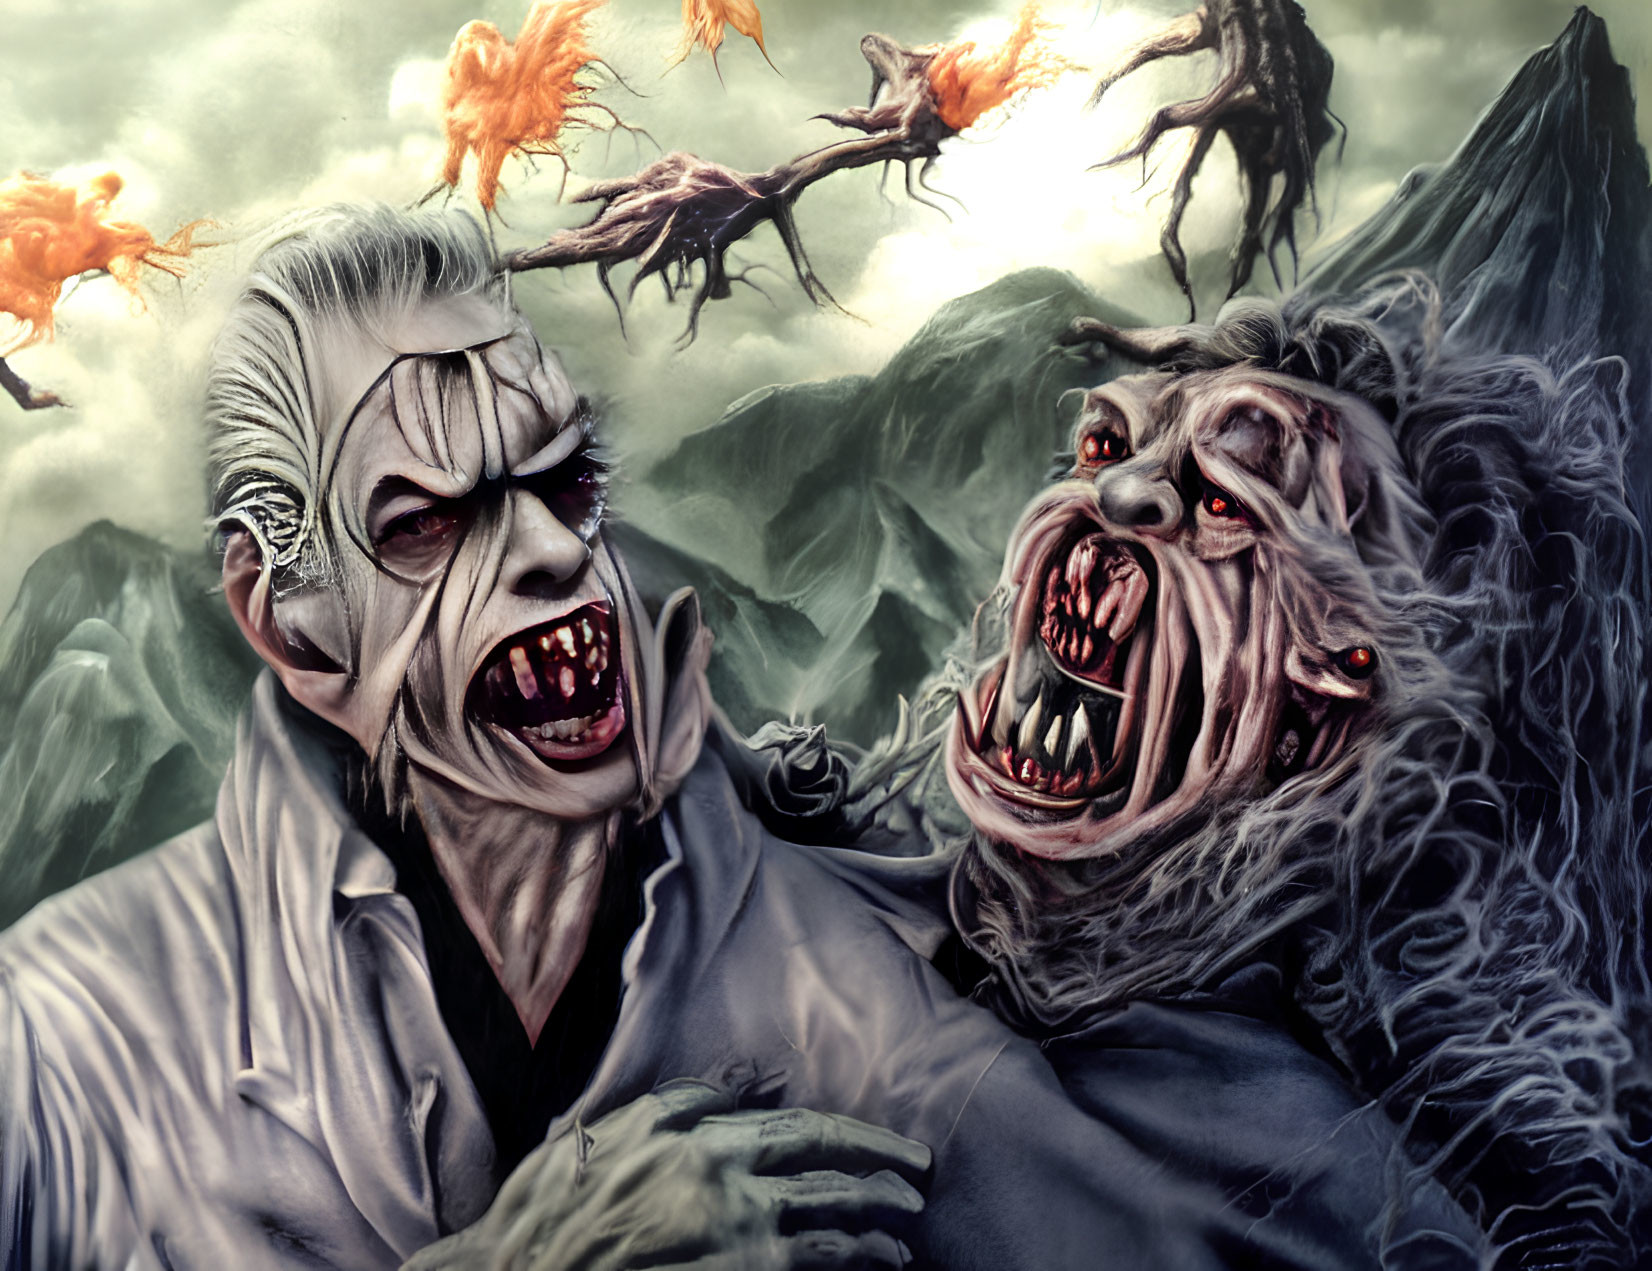 Grotesque monstrous figures in dark mountainous terrain with fiery creatures